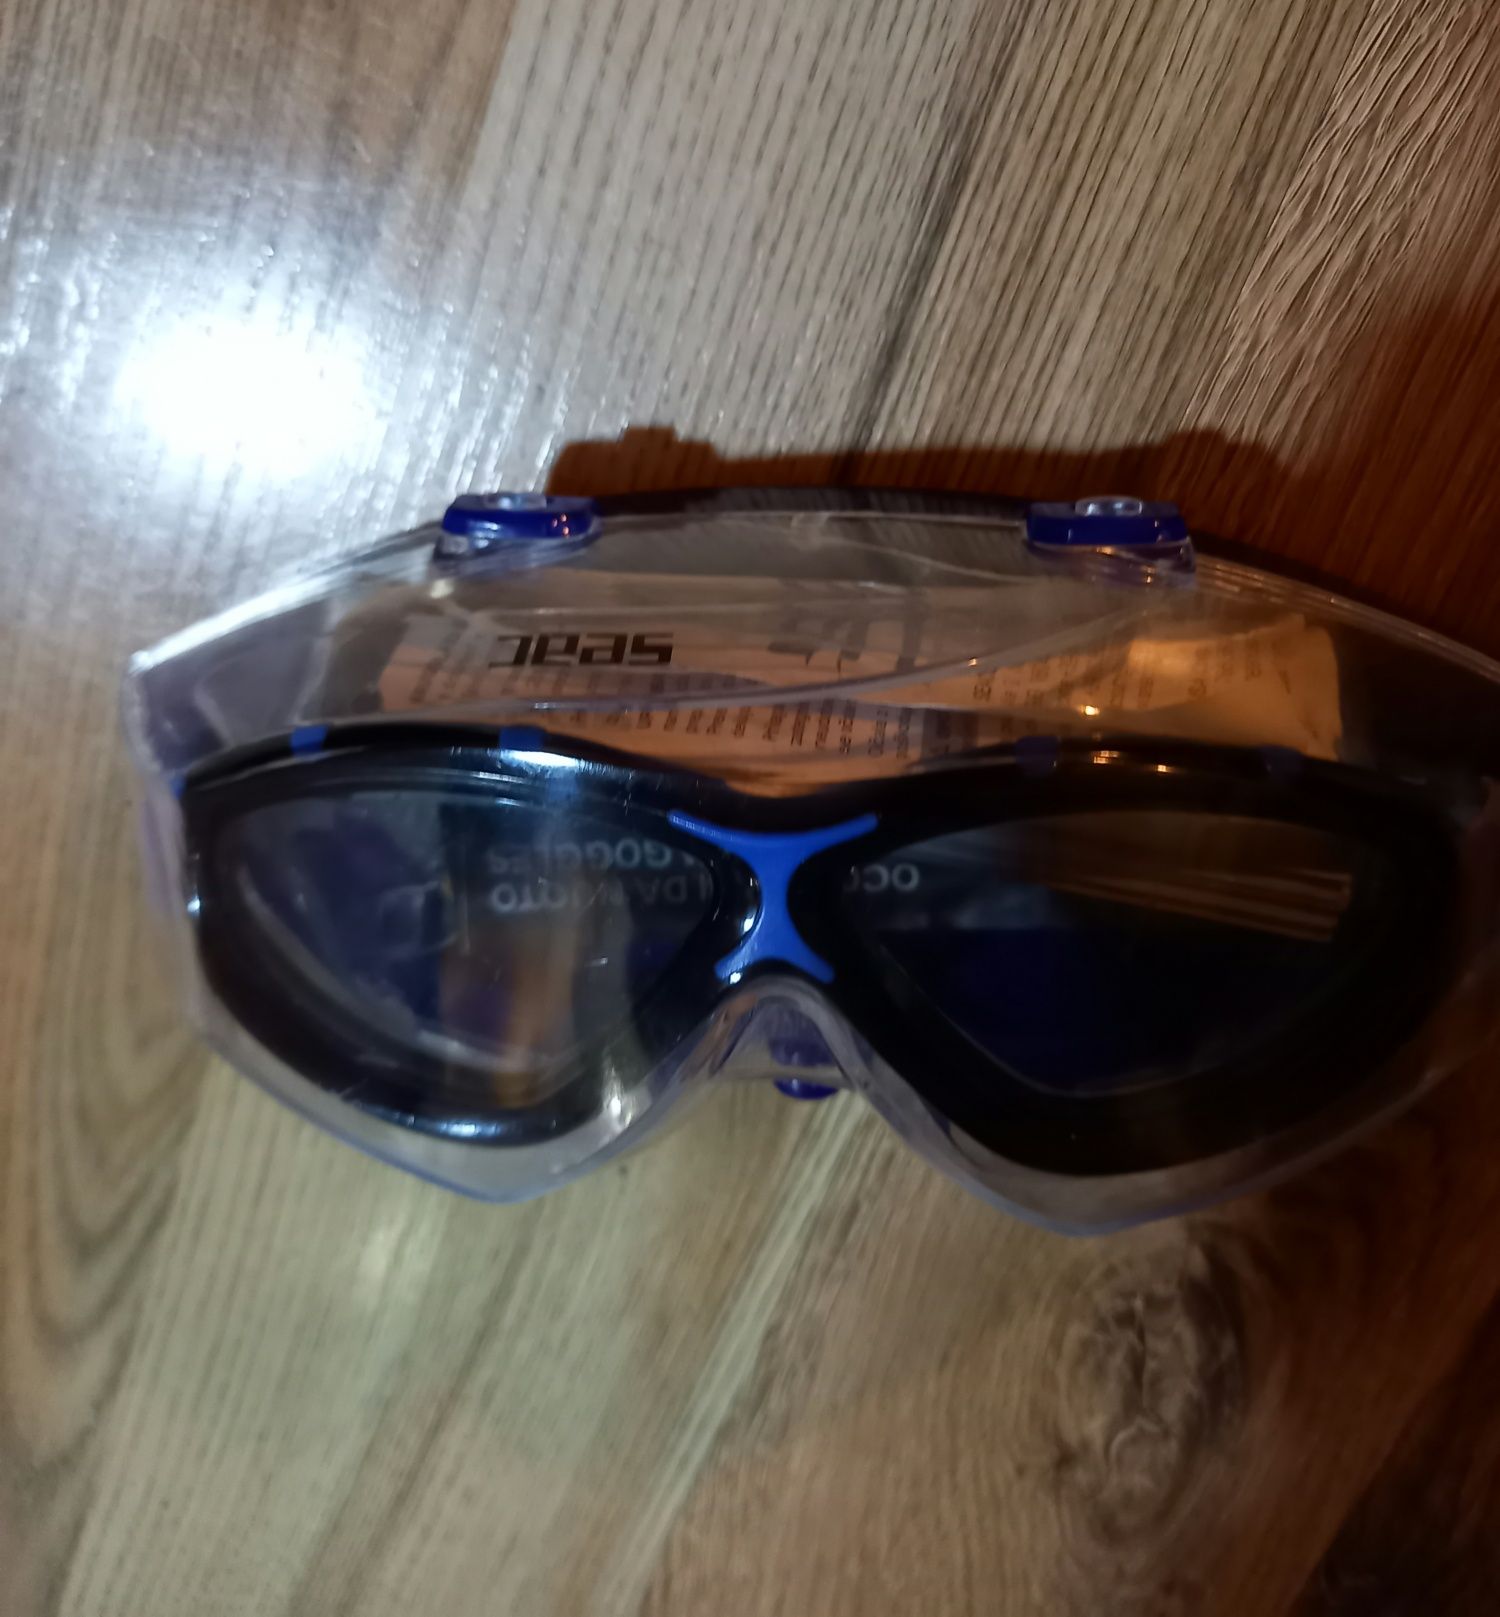 Maska okulary pływackie Seac Profile UV